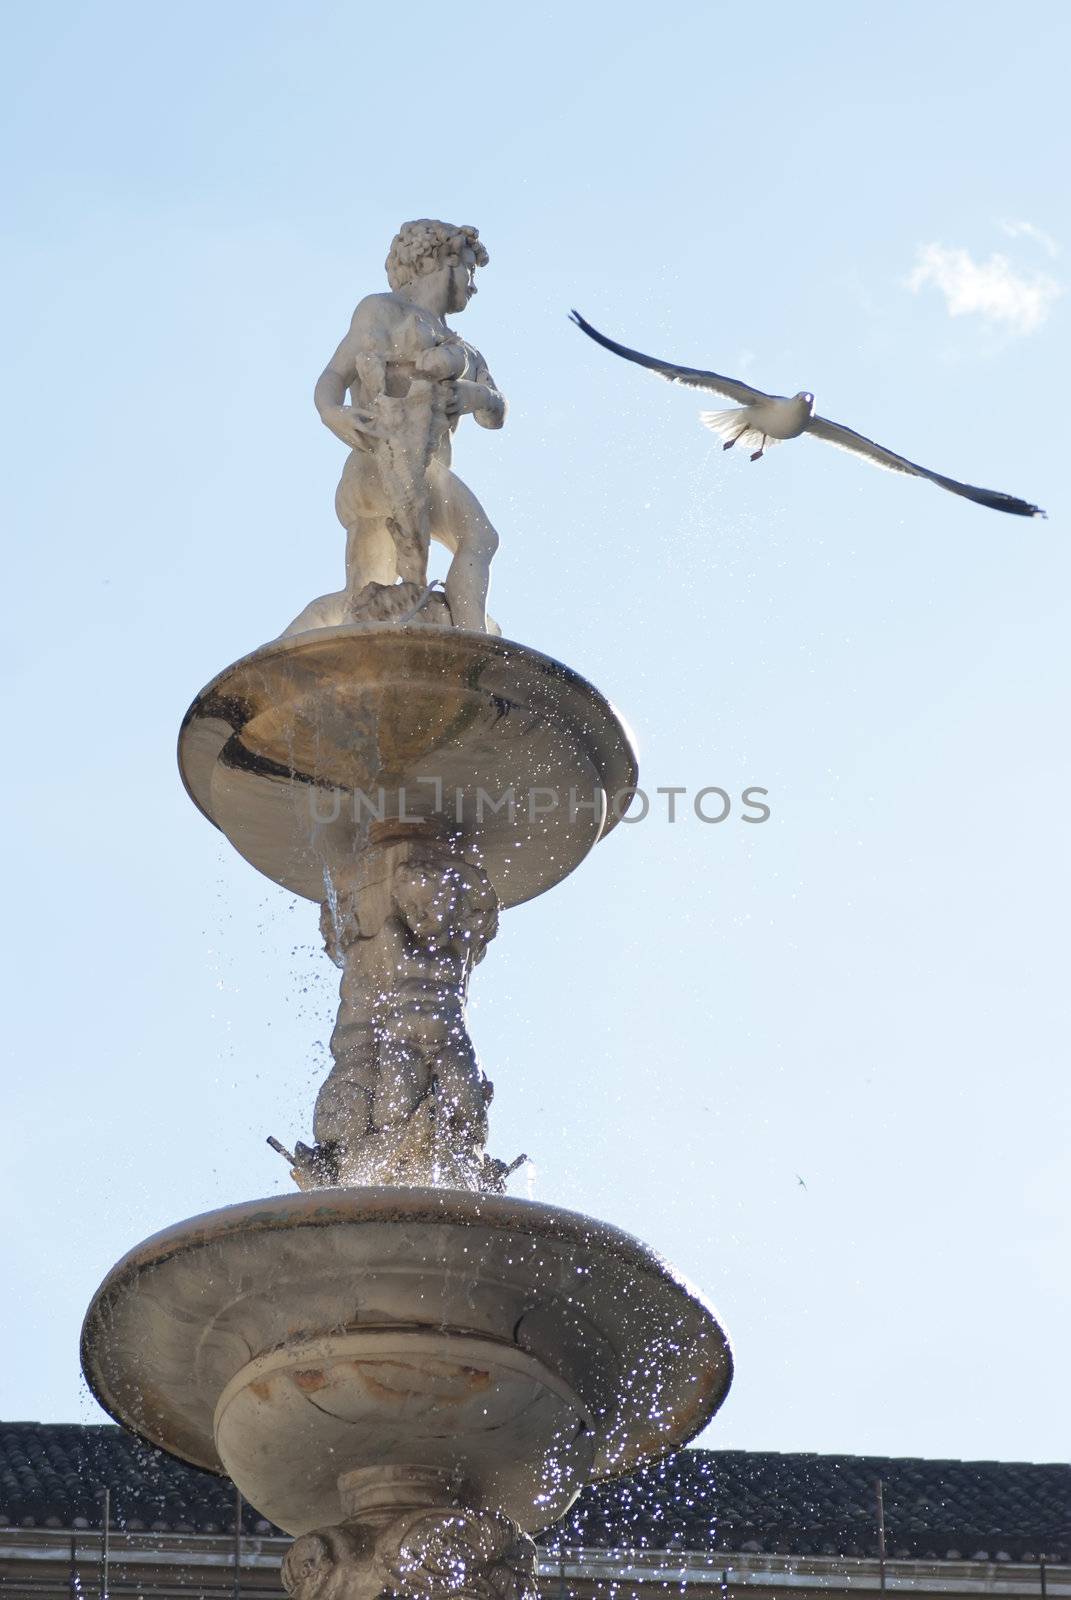 Pretoria Fountain with wather drops in Palermo by gandolfocannatella